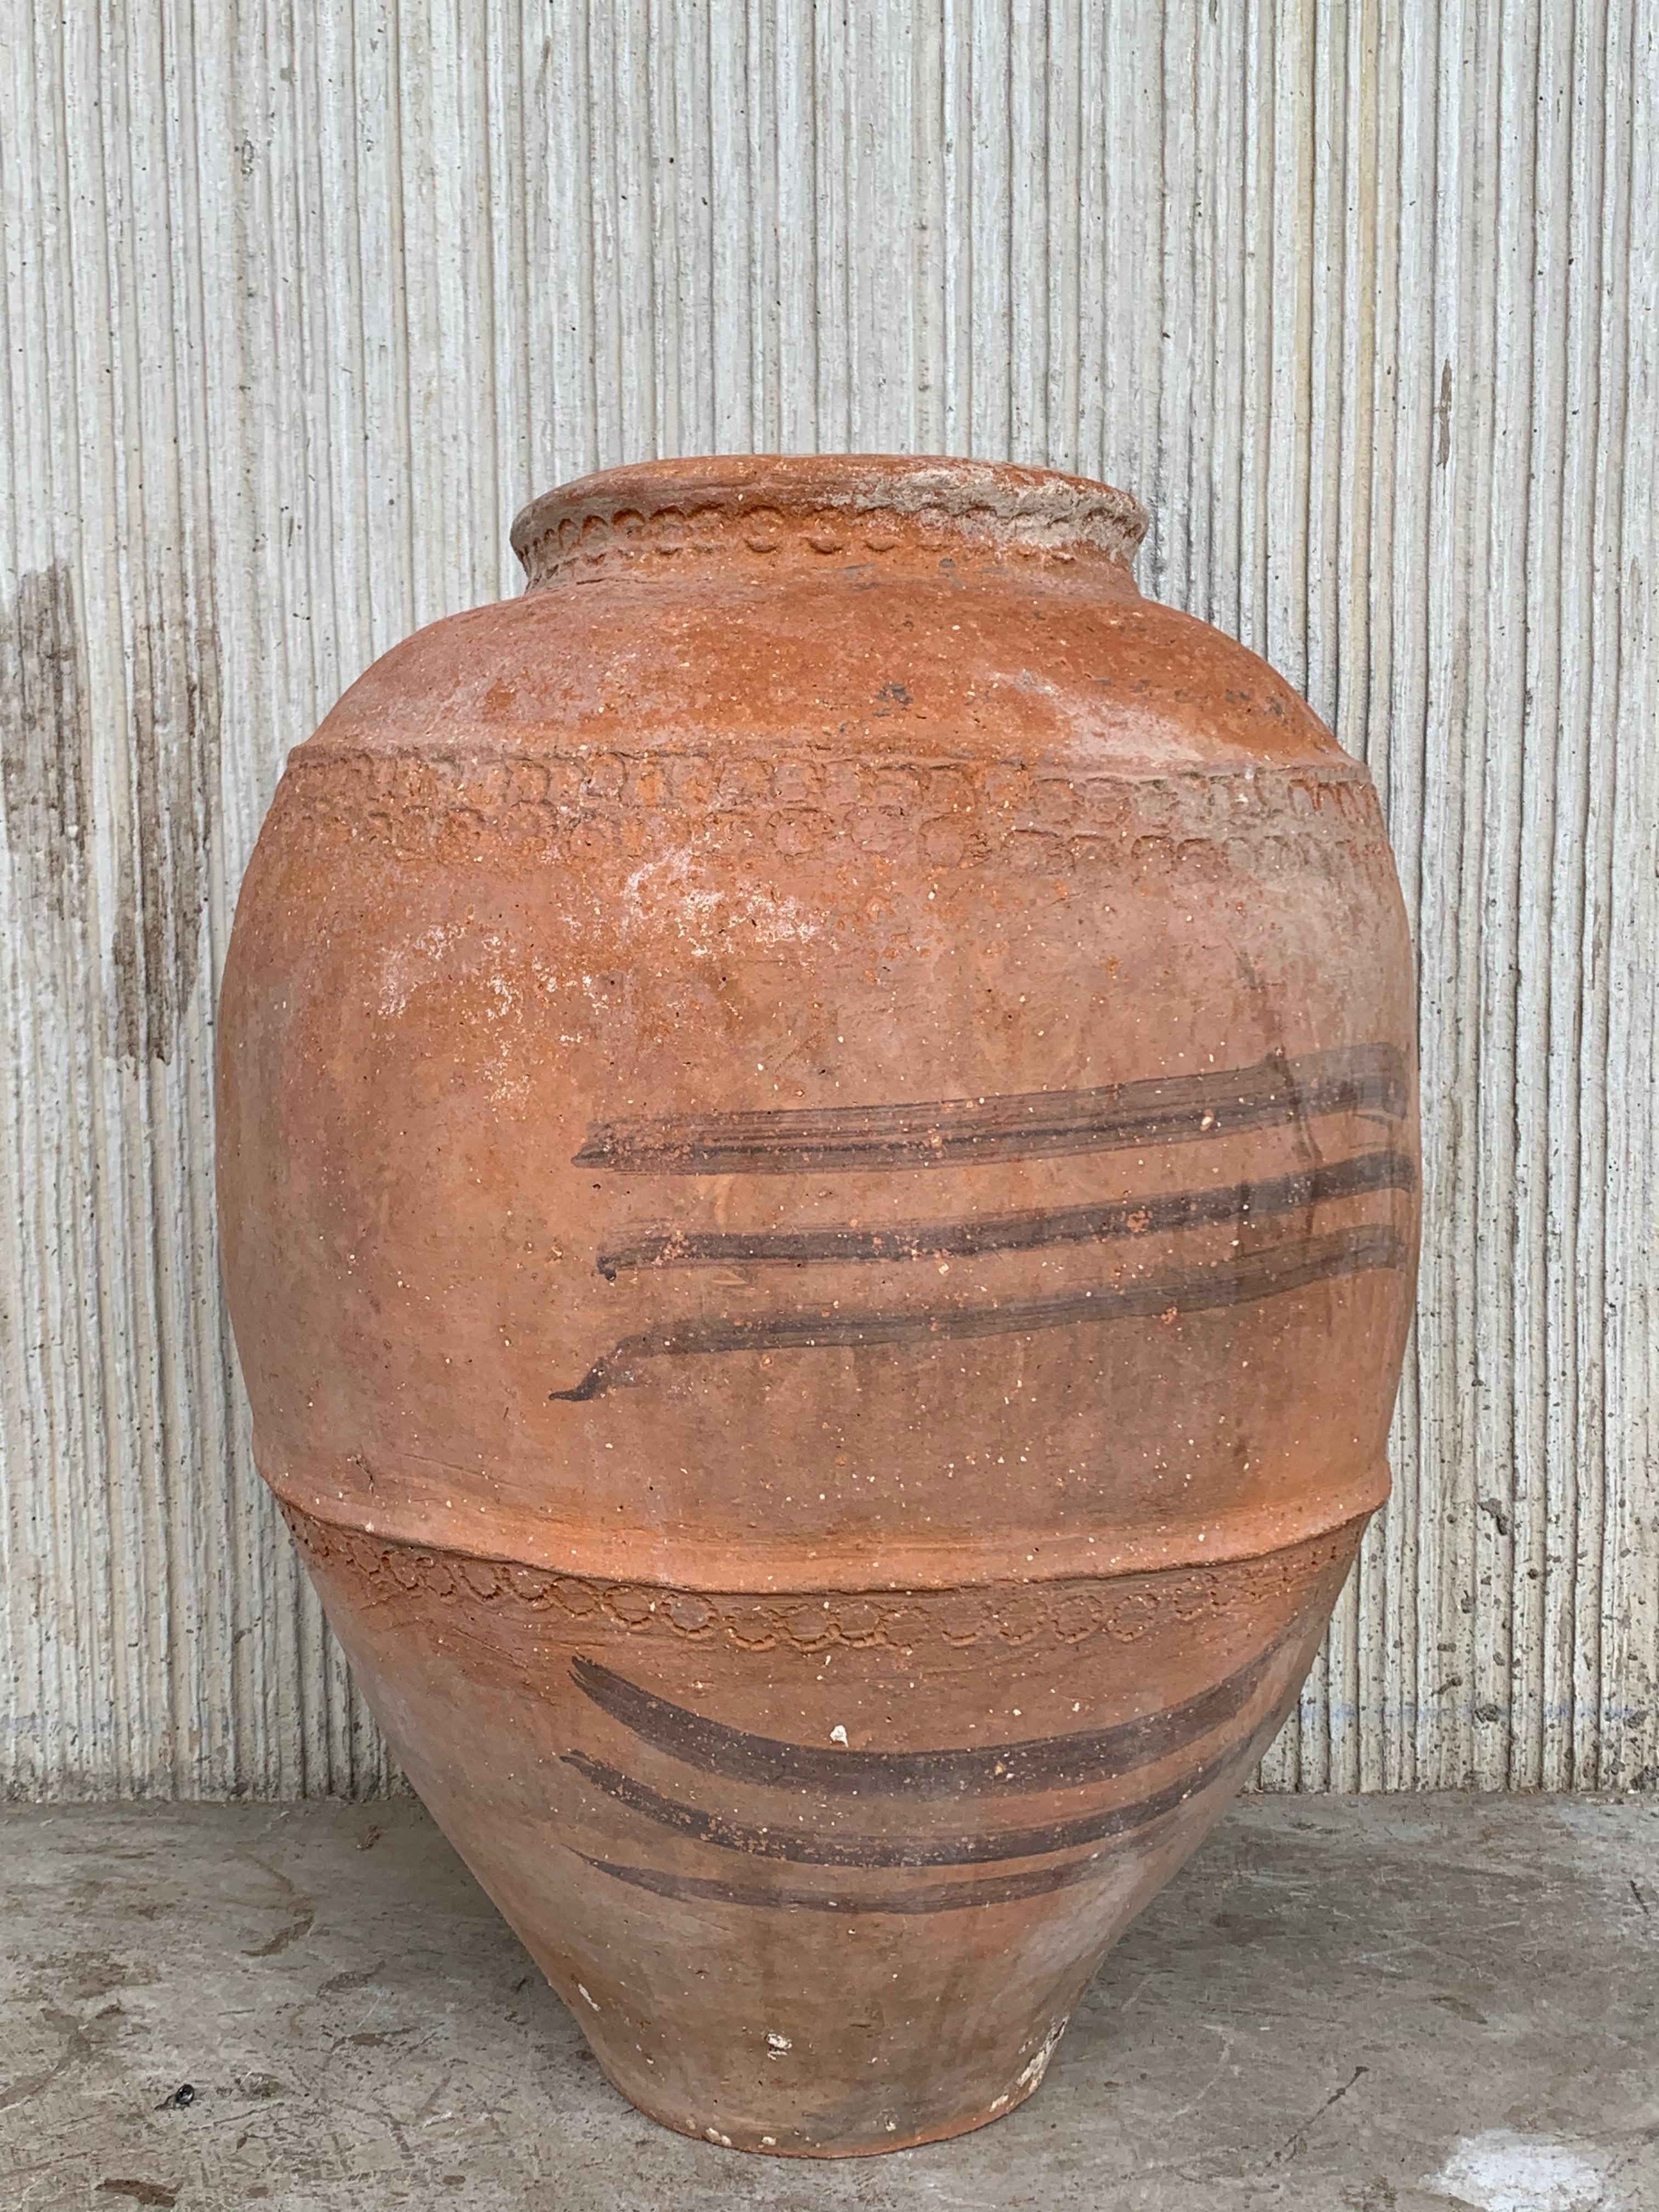 Old tinaja of Calanda (Teruel), Spain.
Made of clay with handcrafted semi circular handmade ribbed around the vase
This 